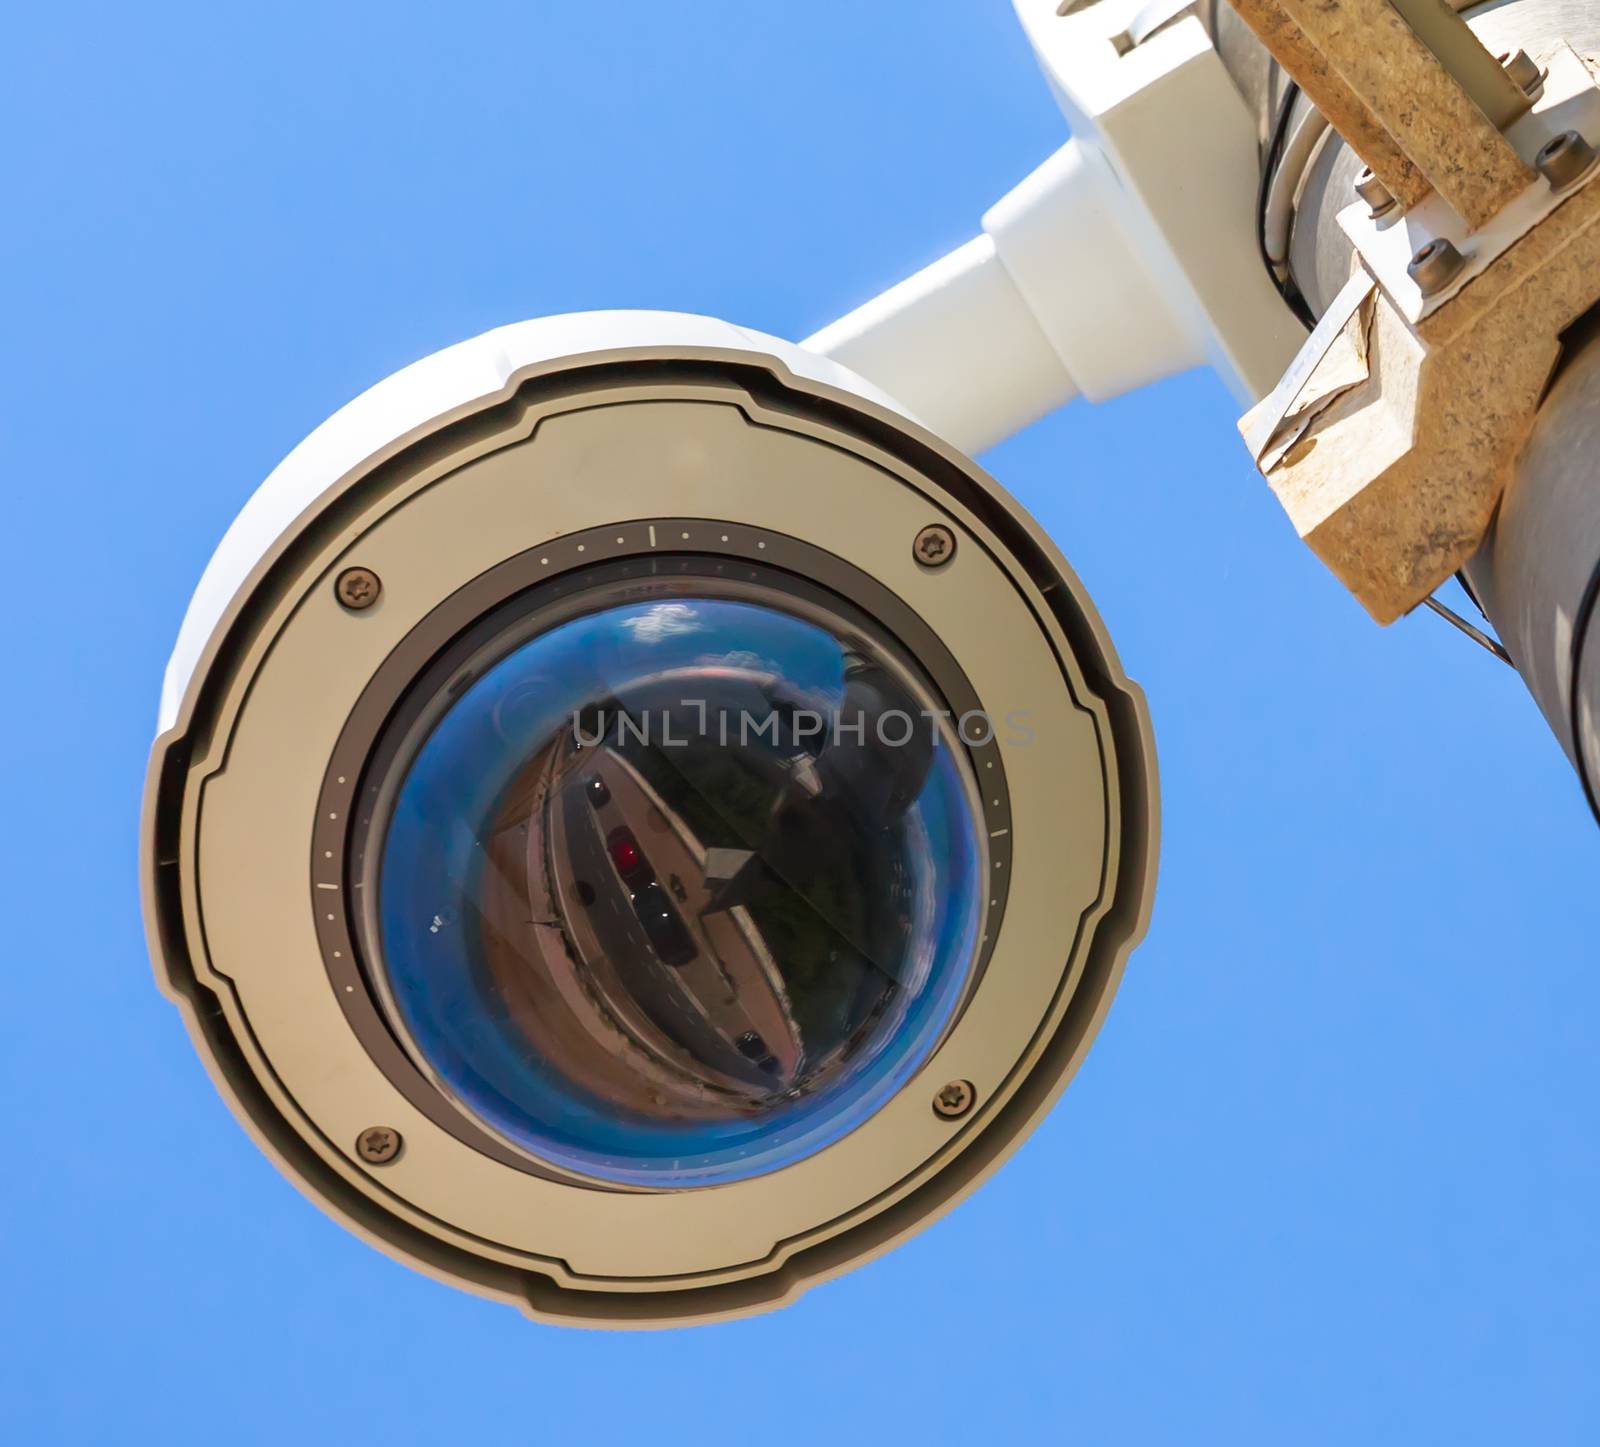 Security CCTV camera under blue sky by pixinoo